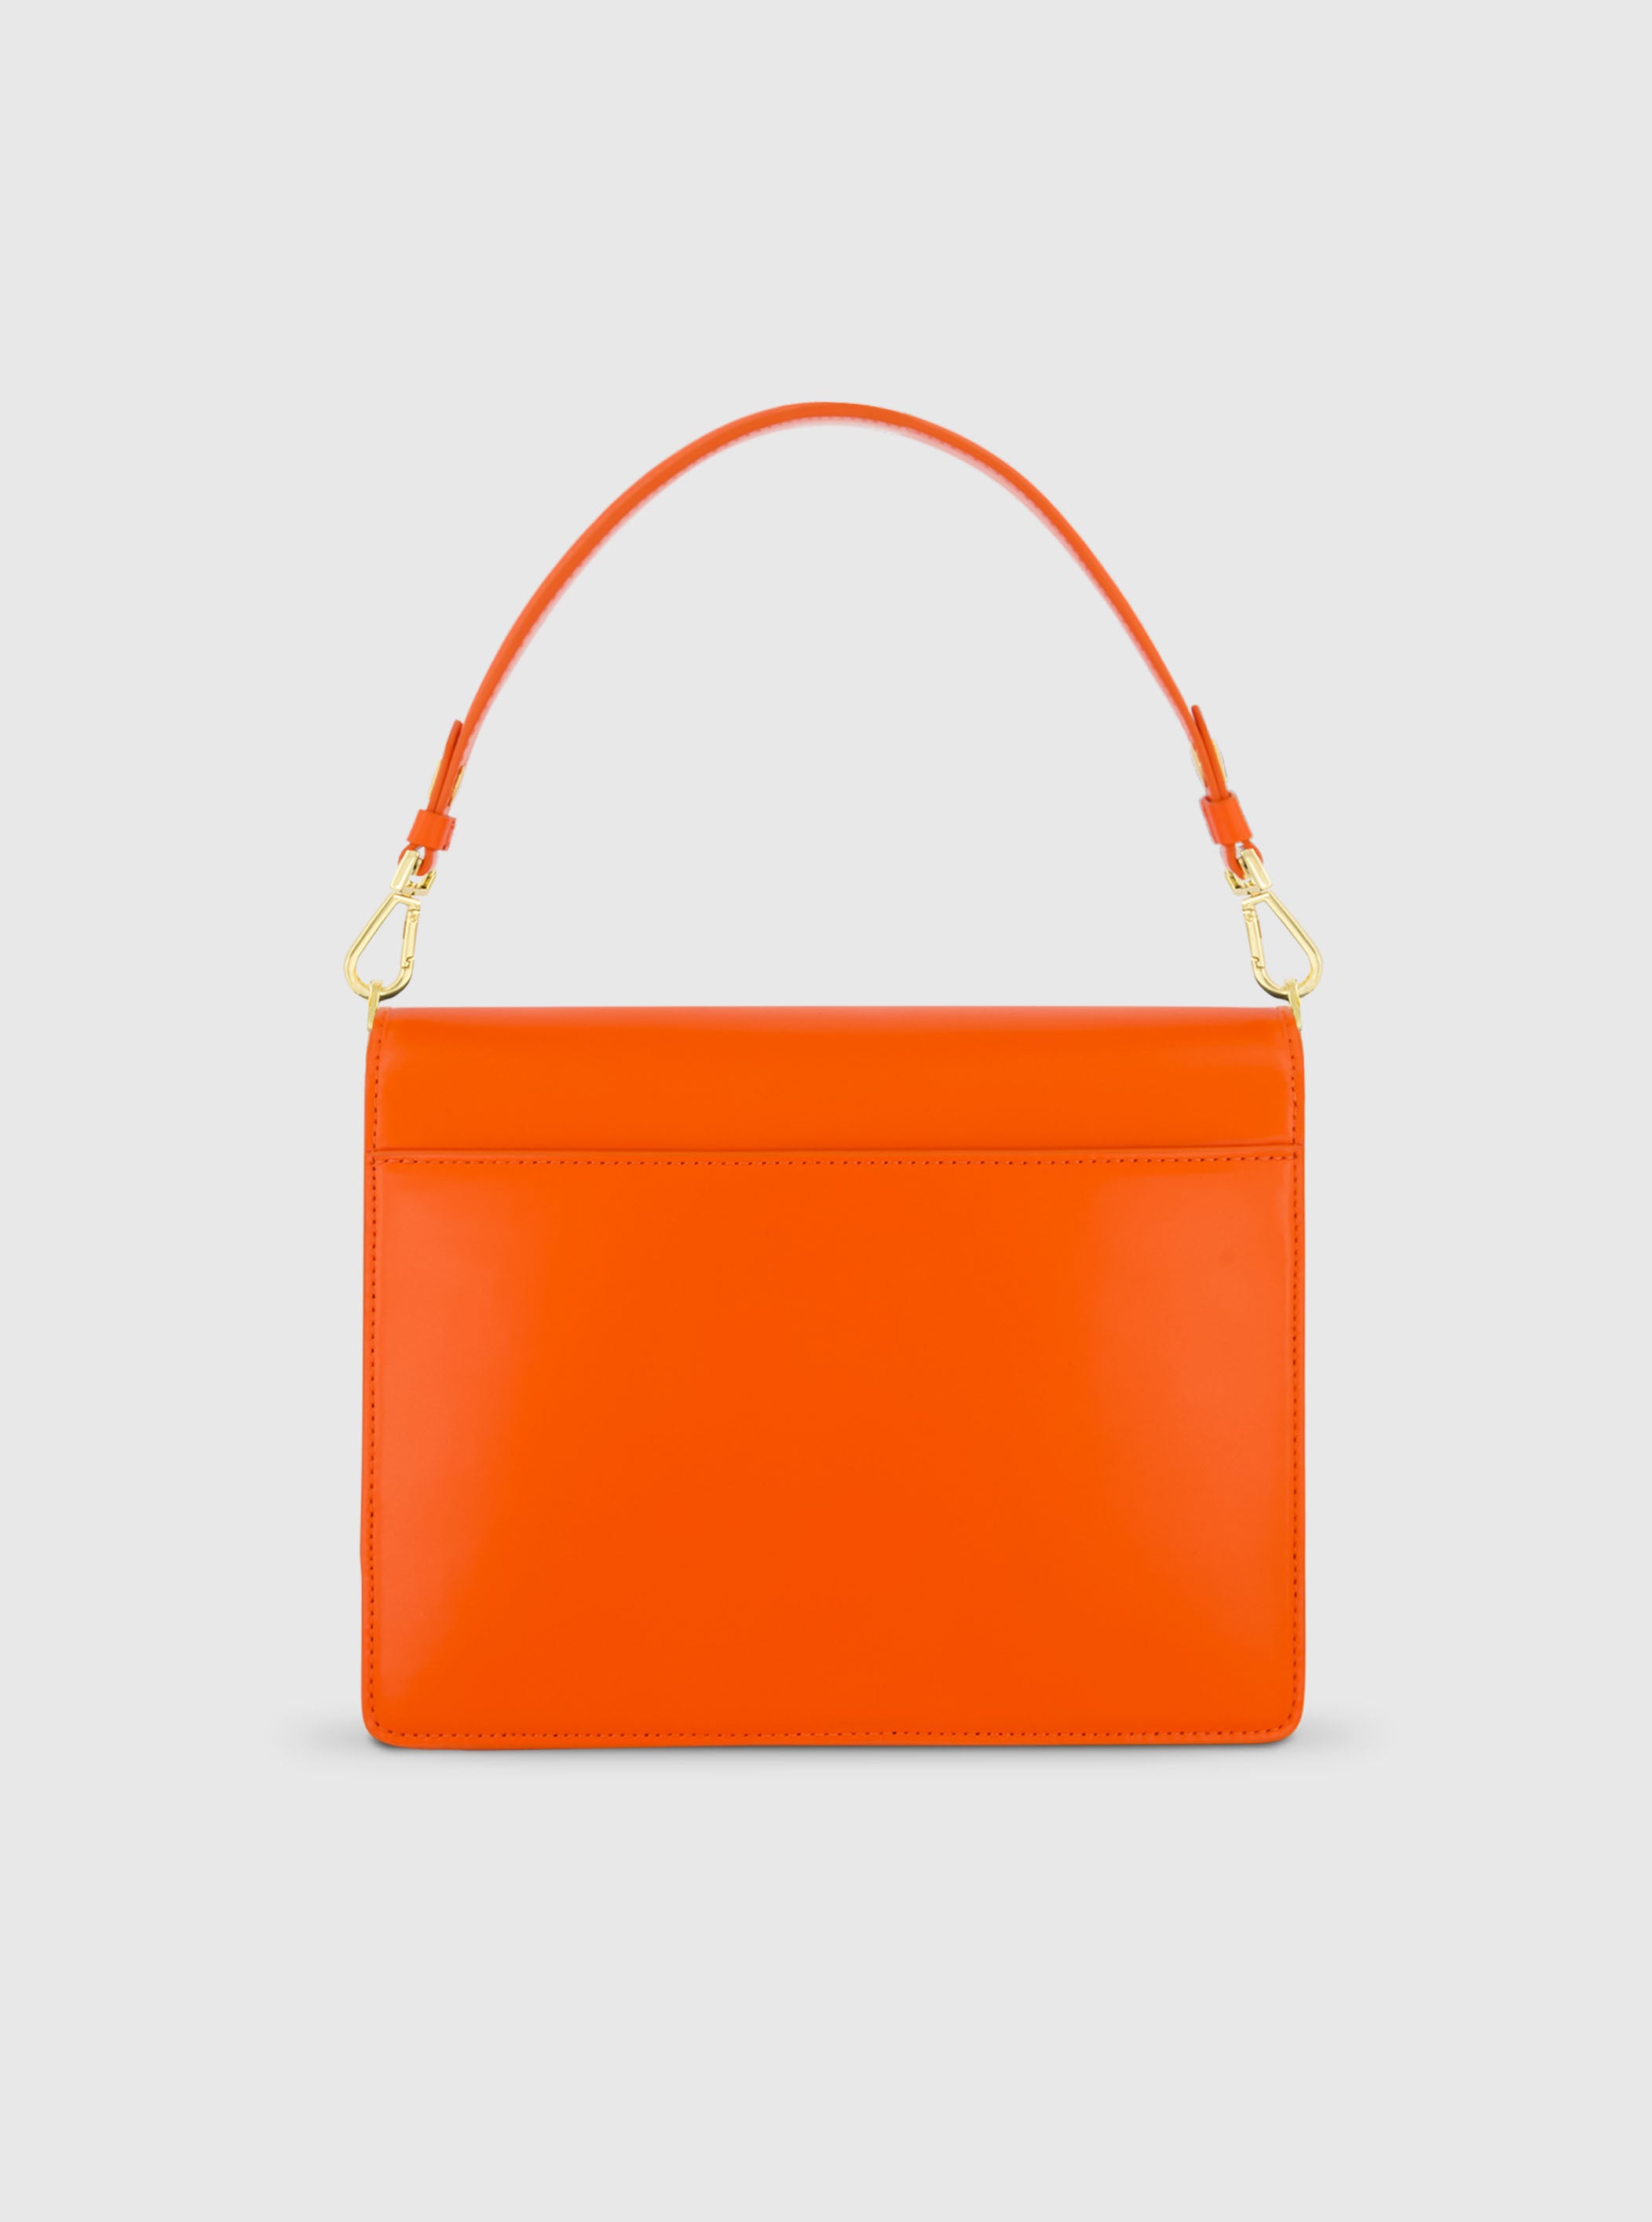 Classic Sunset Leather Medium Shoulder Bag with Detachable Strap